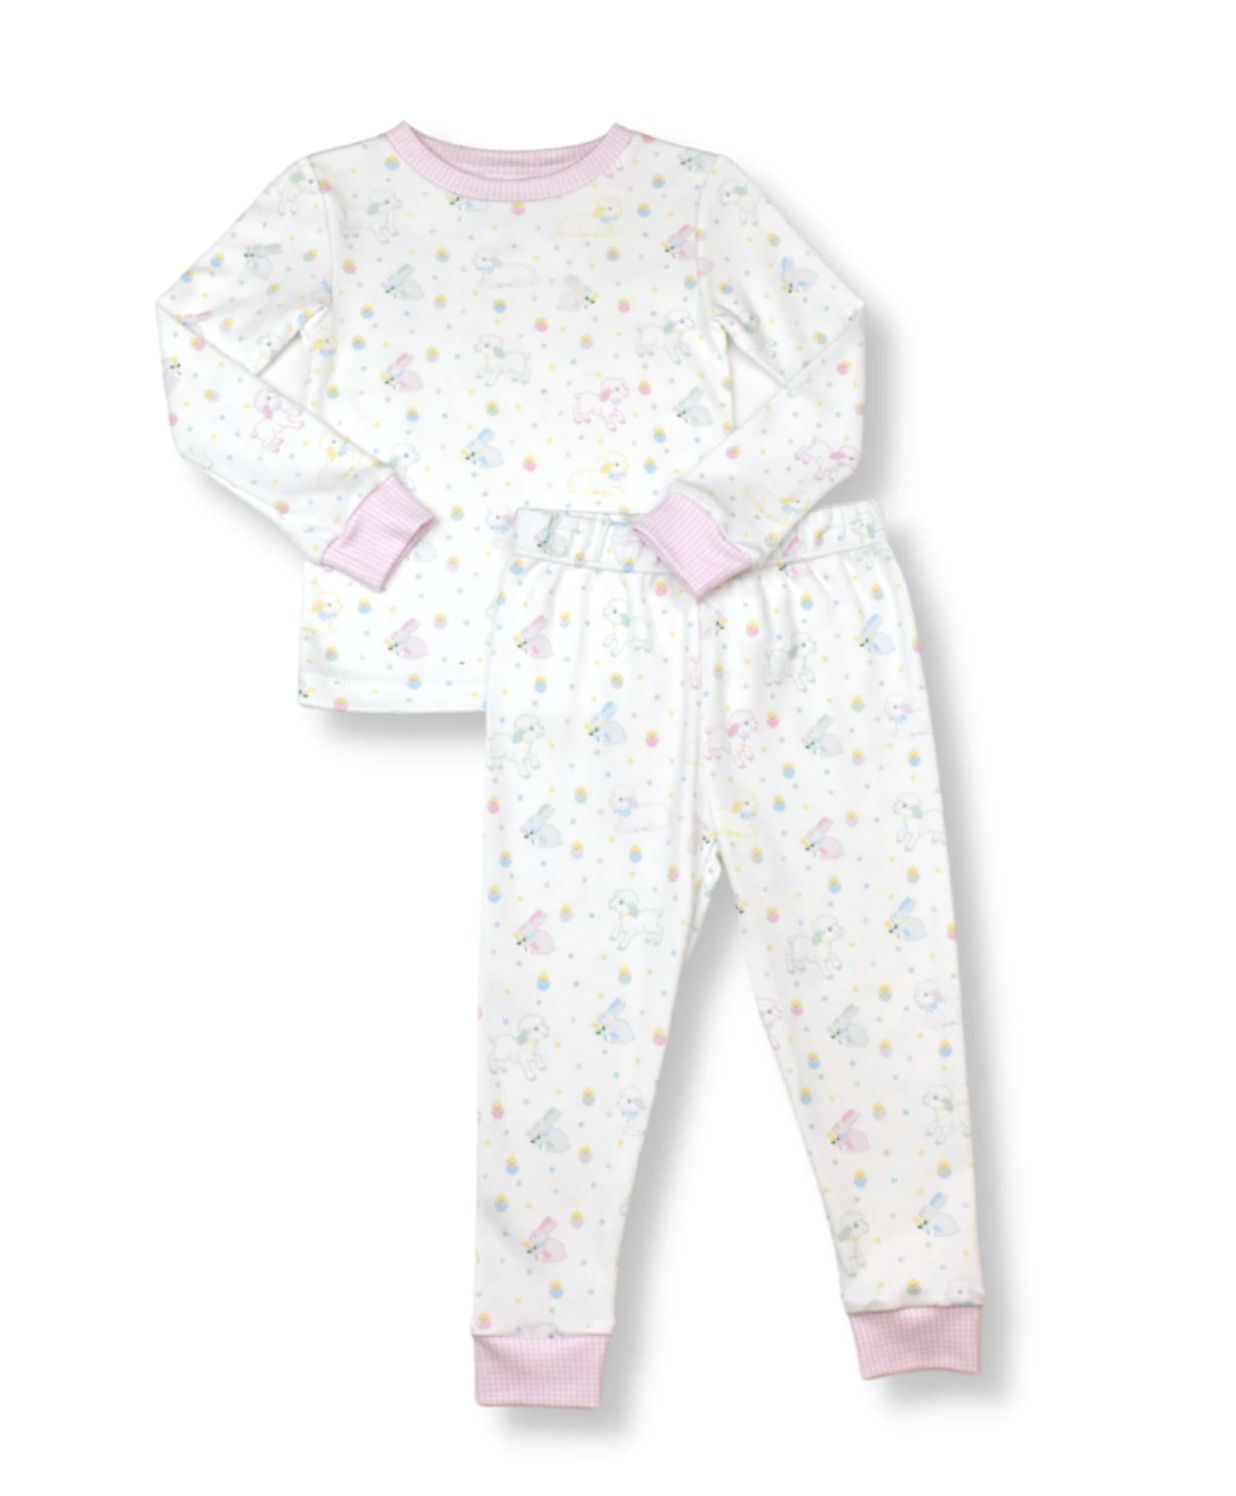 Lullaby Set Pink Pima Cotton Easter Pajama Set